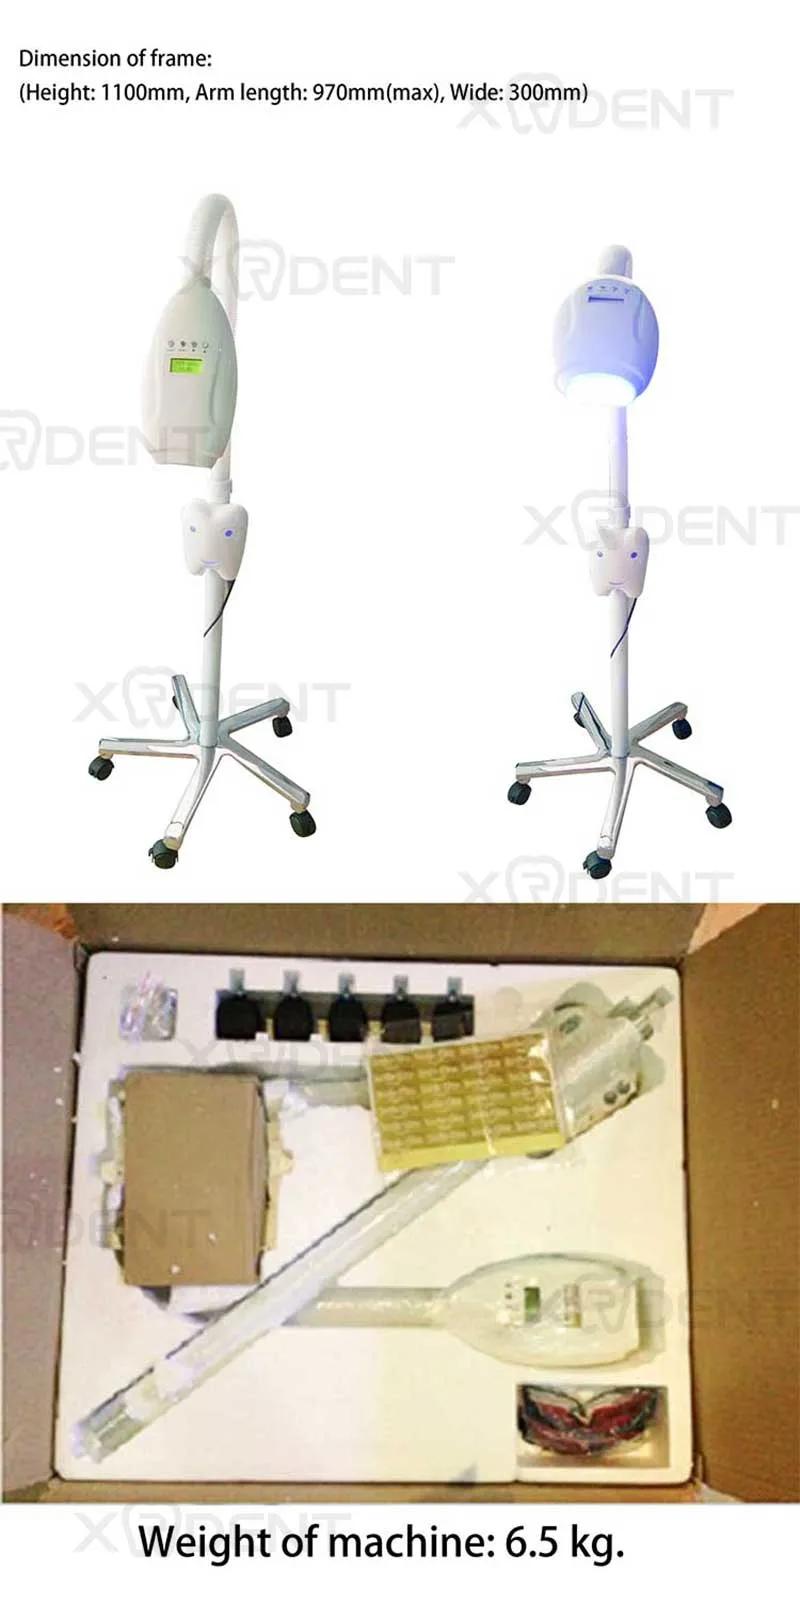 Dental Professional LED Portable Small Mobile Teeth Whitening Machine